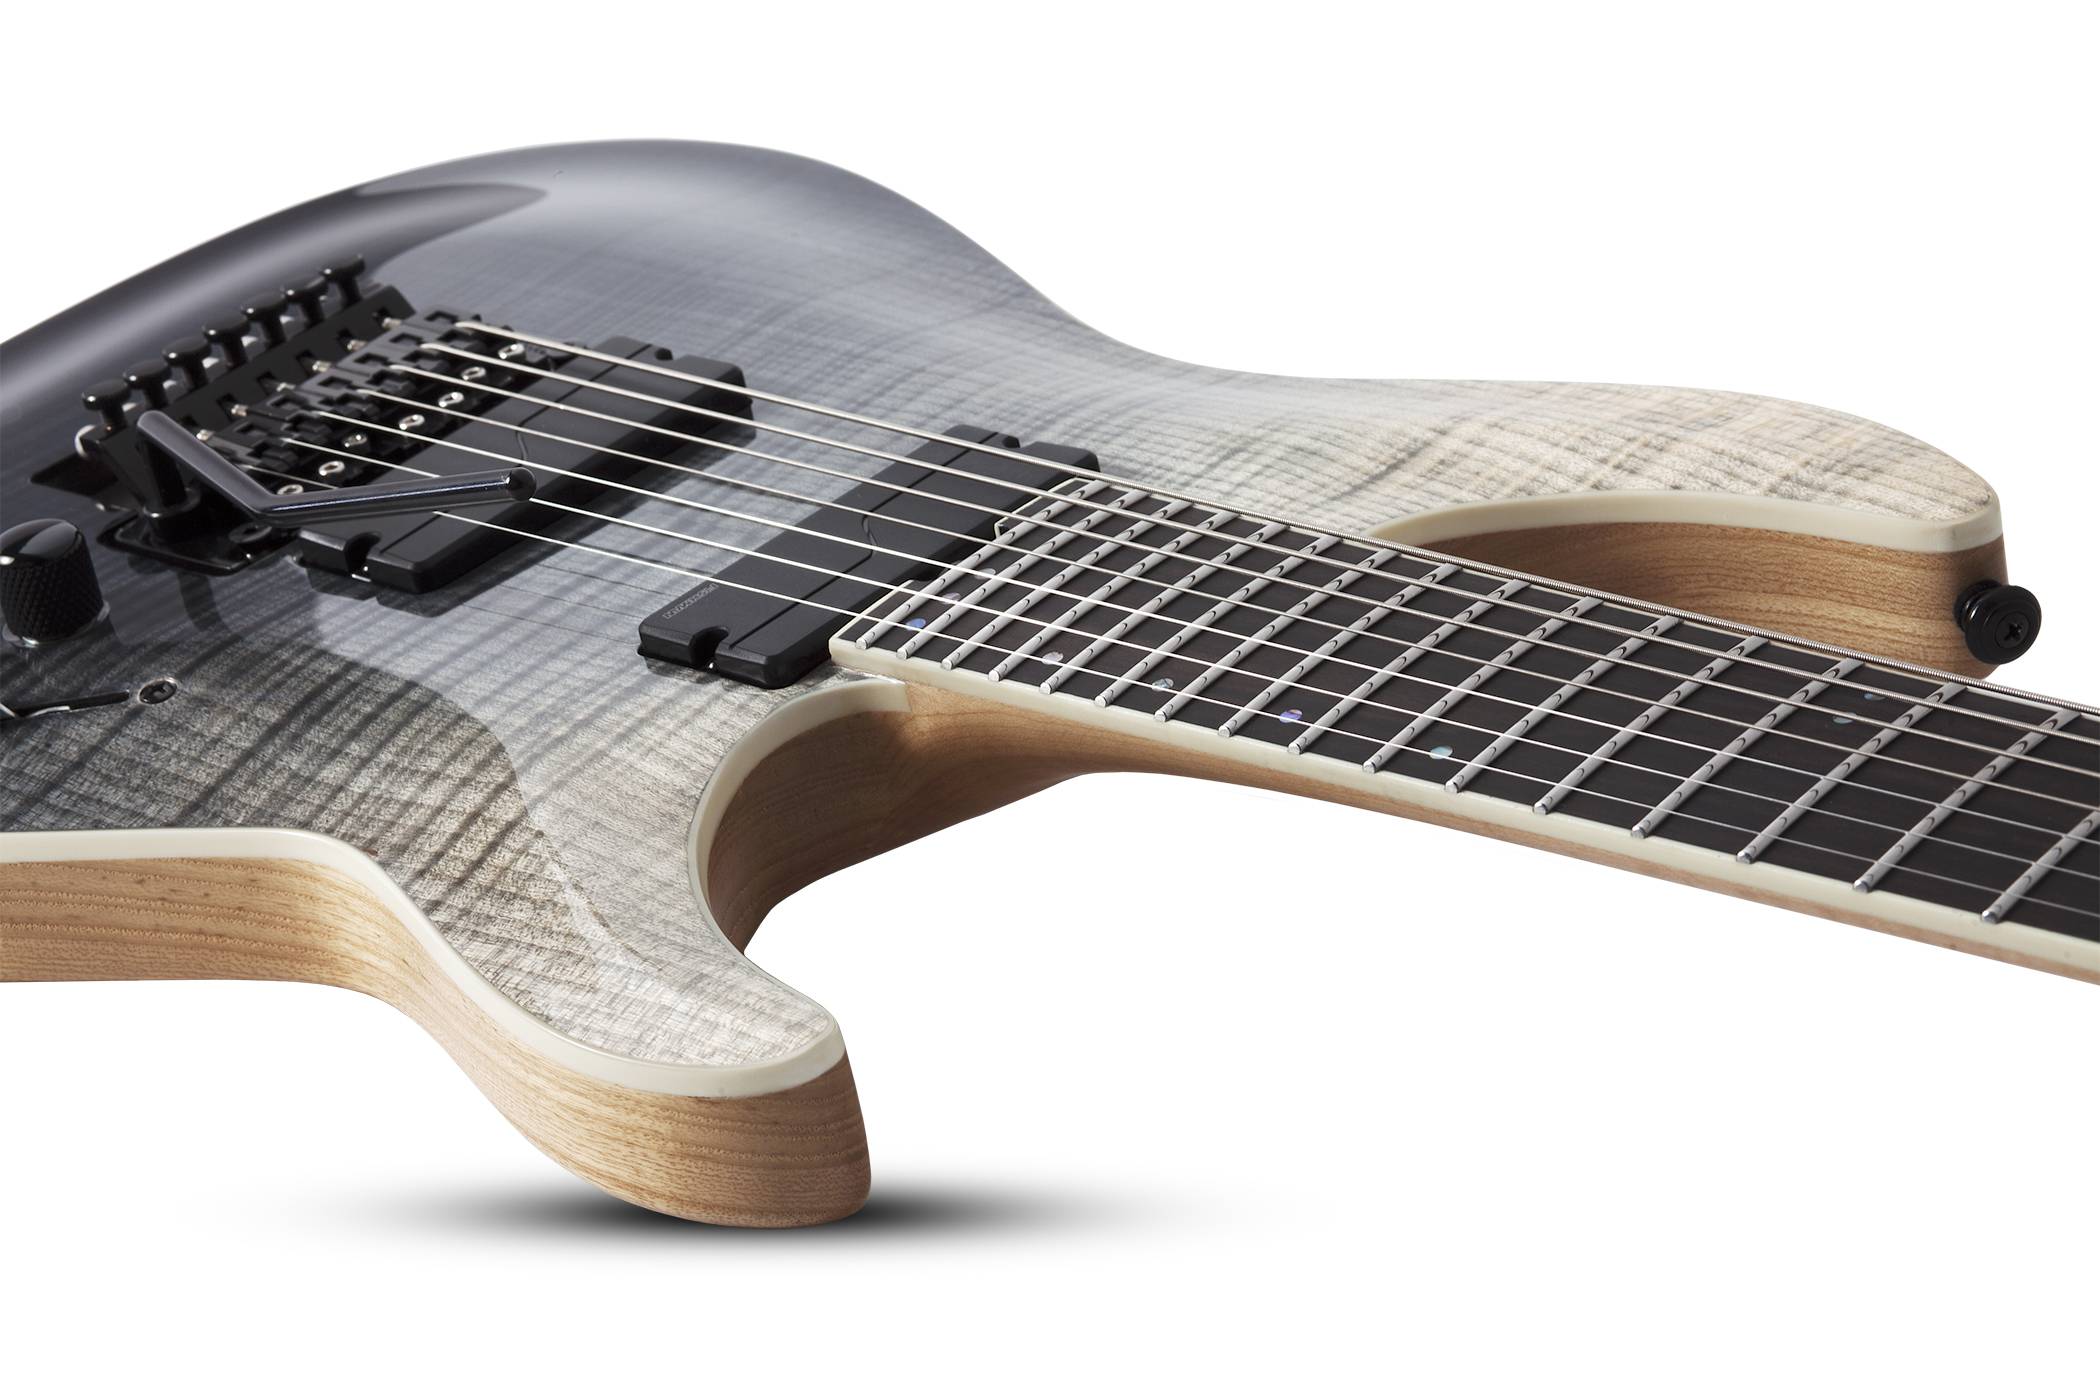 Schecter C-7 FR SLS Elite - black fade burst Baritone guitar grey